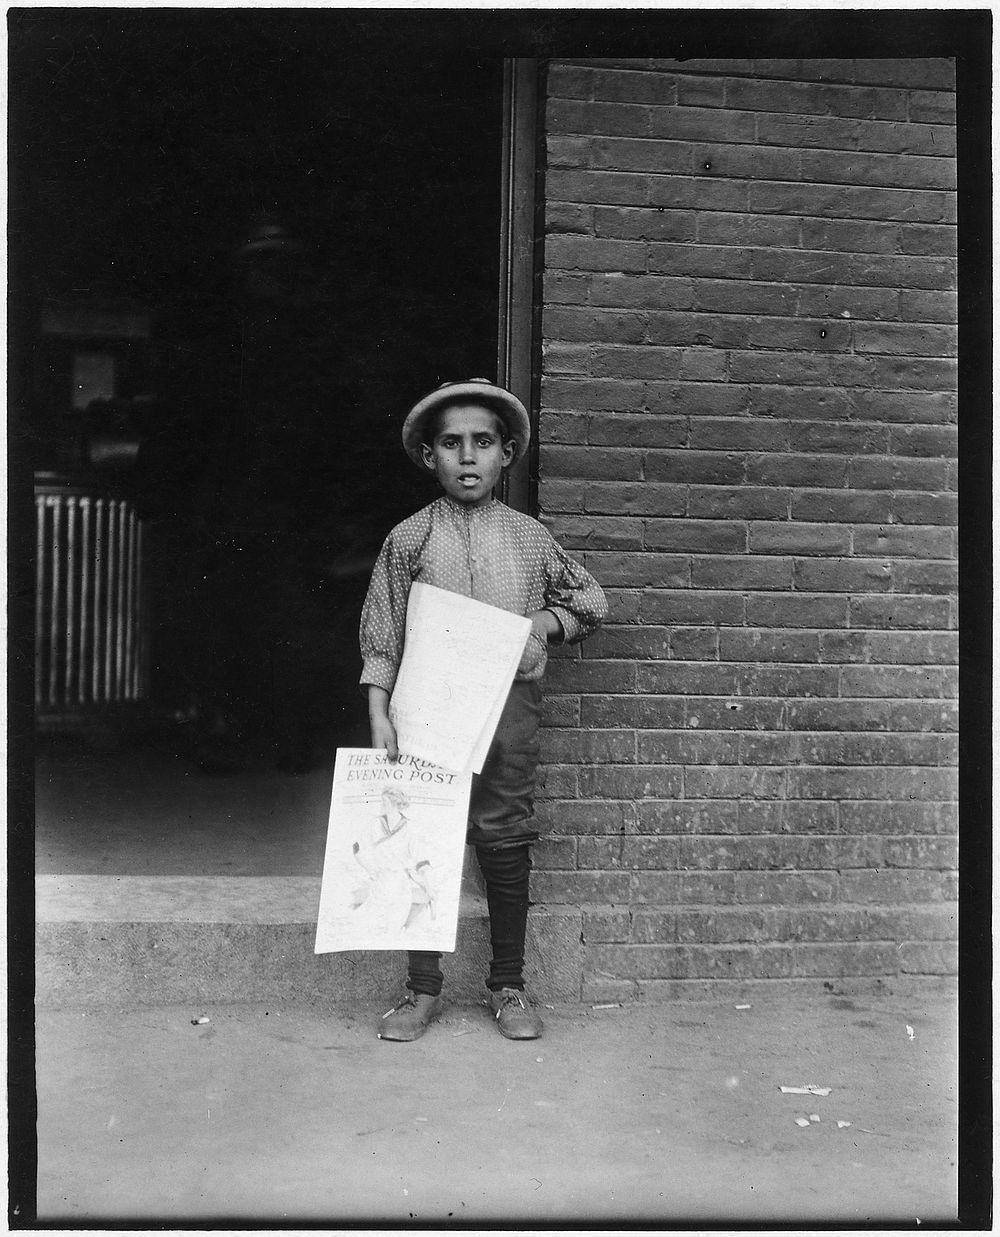 Small Newsie at depot. Burlington, Vt, September 1910. Photographer: Hine, Lewis. Original public domain image from Flickr